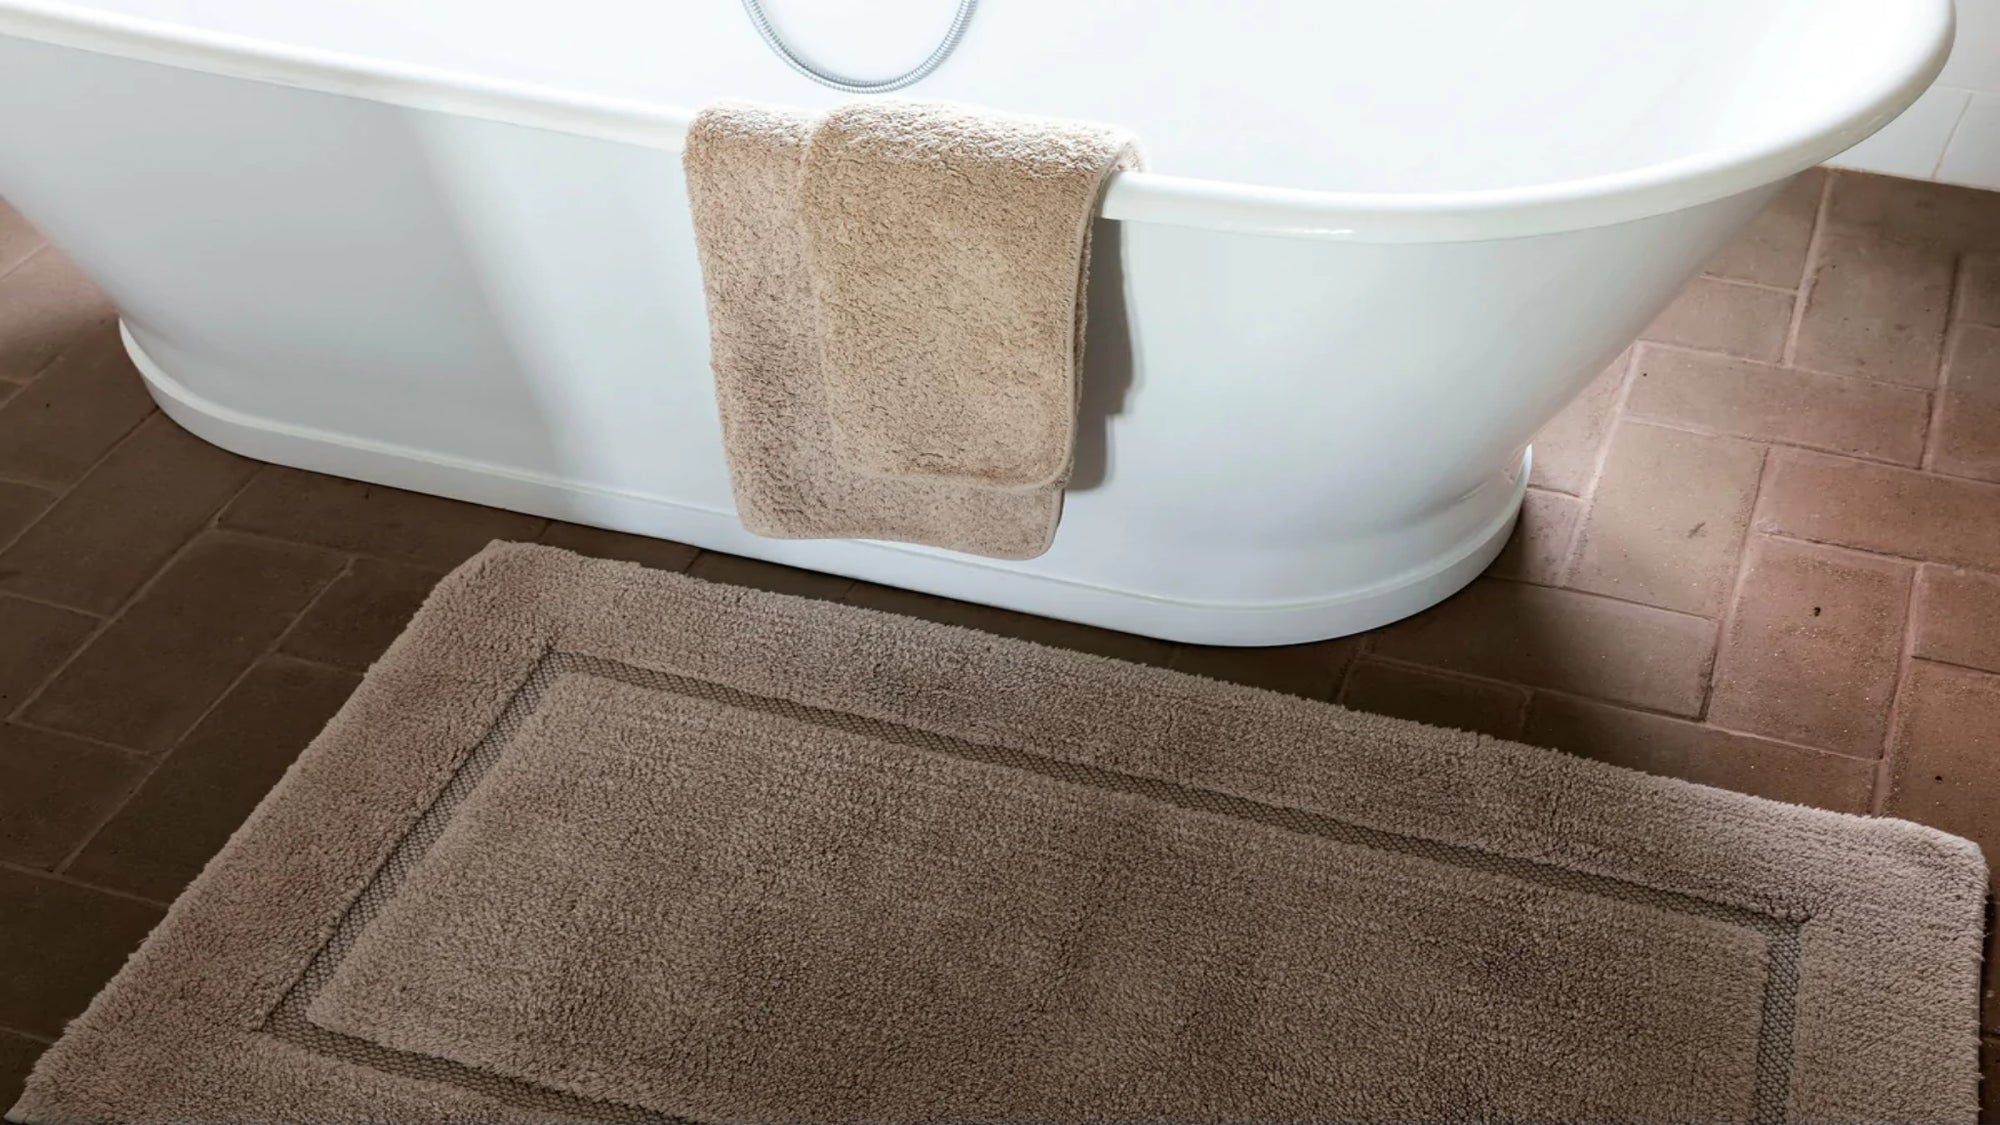 Brown bath rug on bathroom floor beside a tub